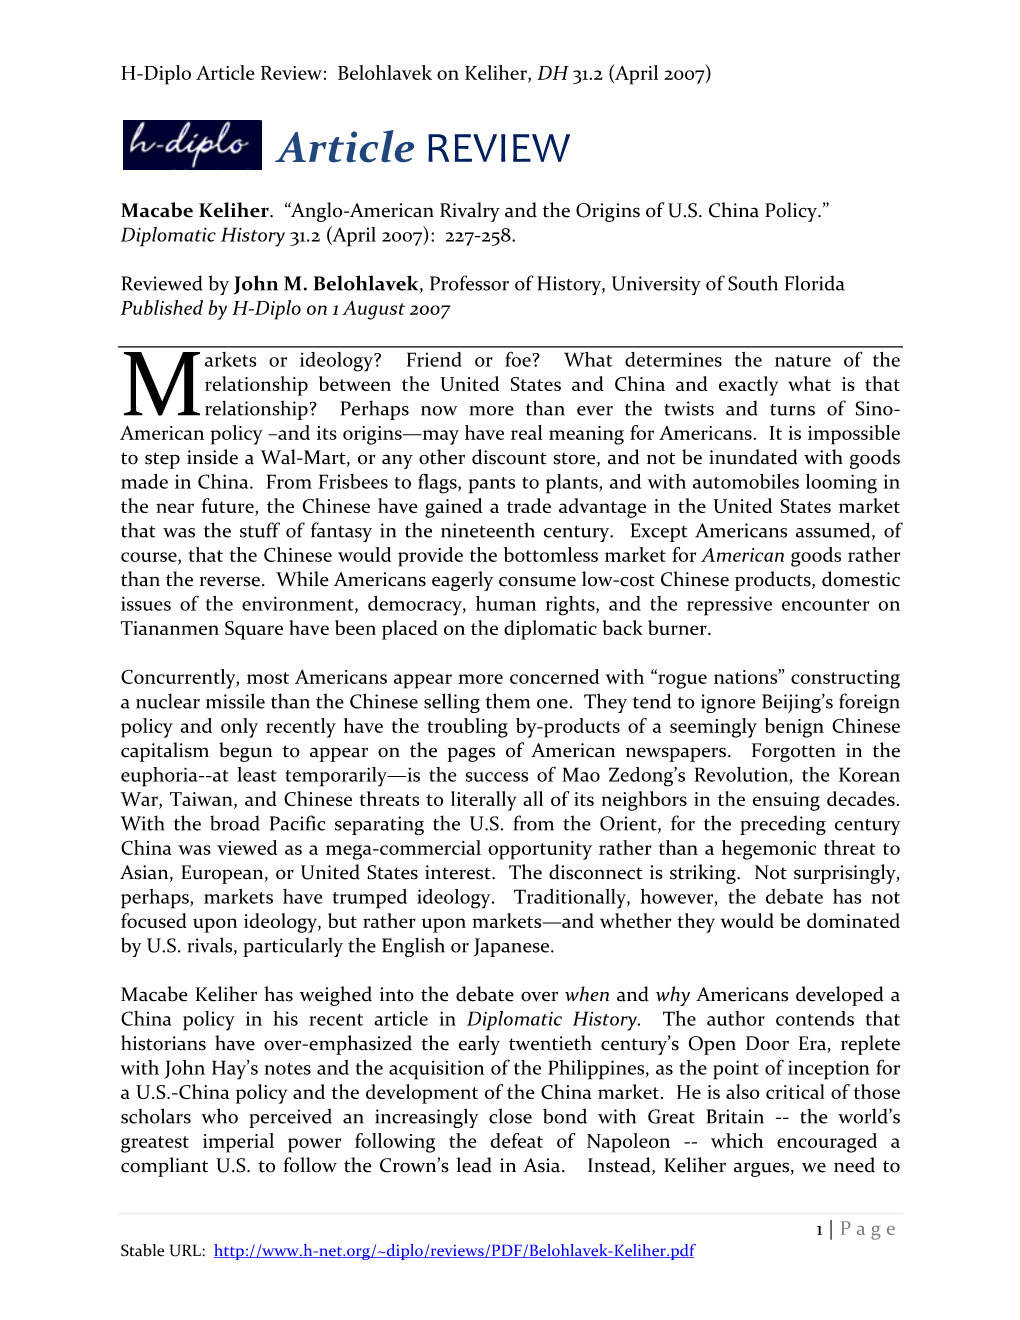 H-Diplo Article Review: Belohlavek on Keliher, DH 31.2 (April 2007)